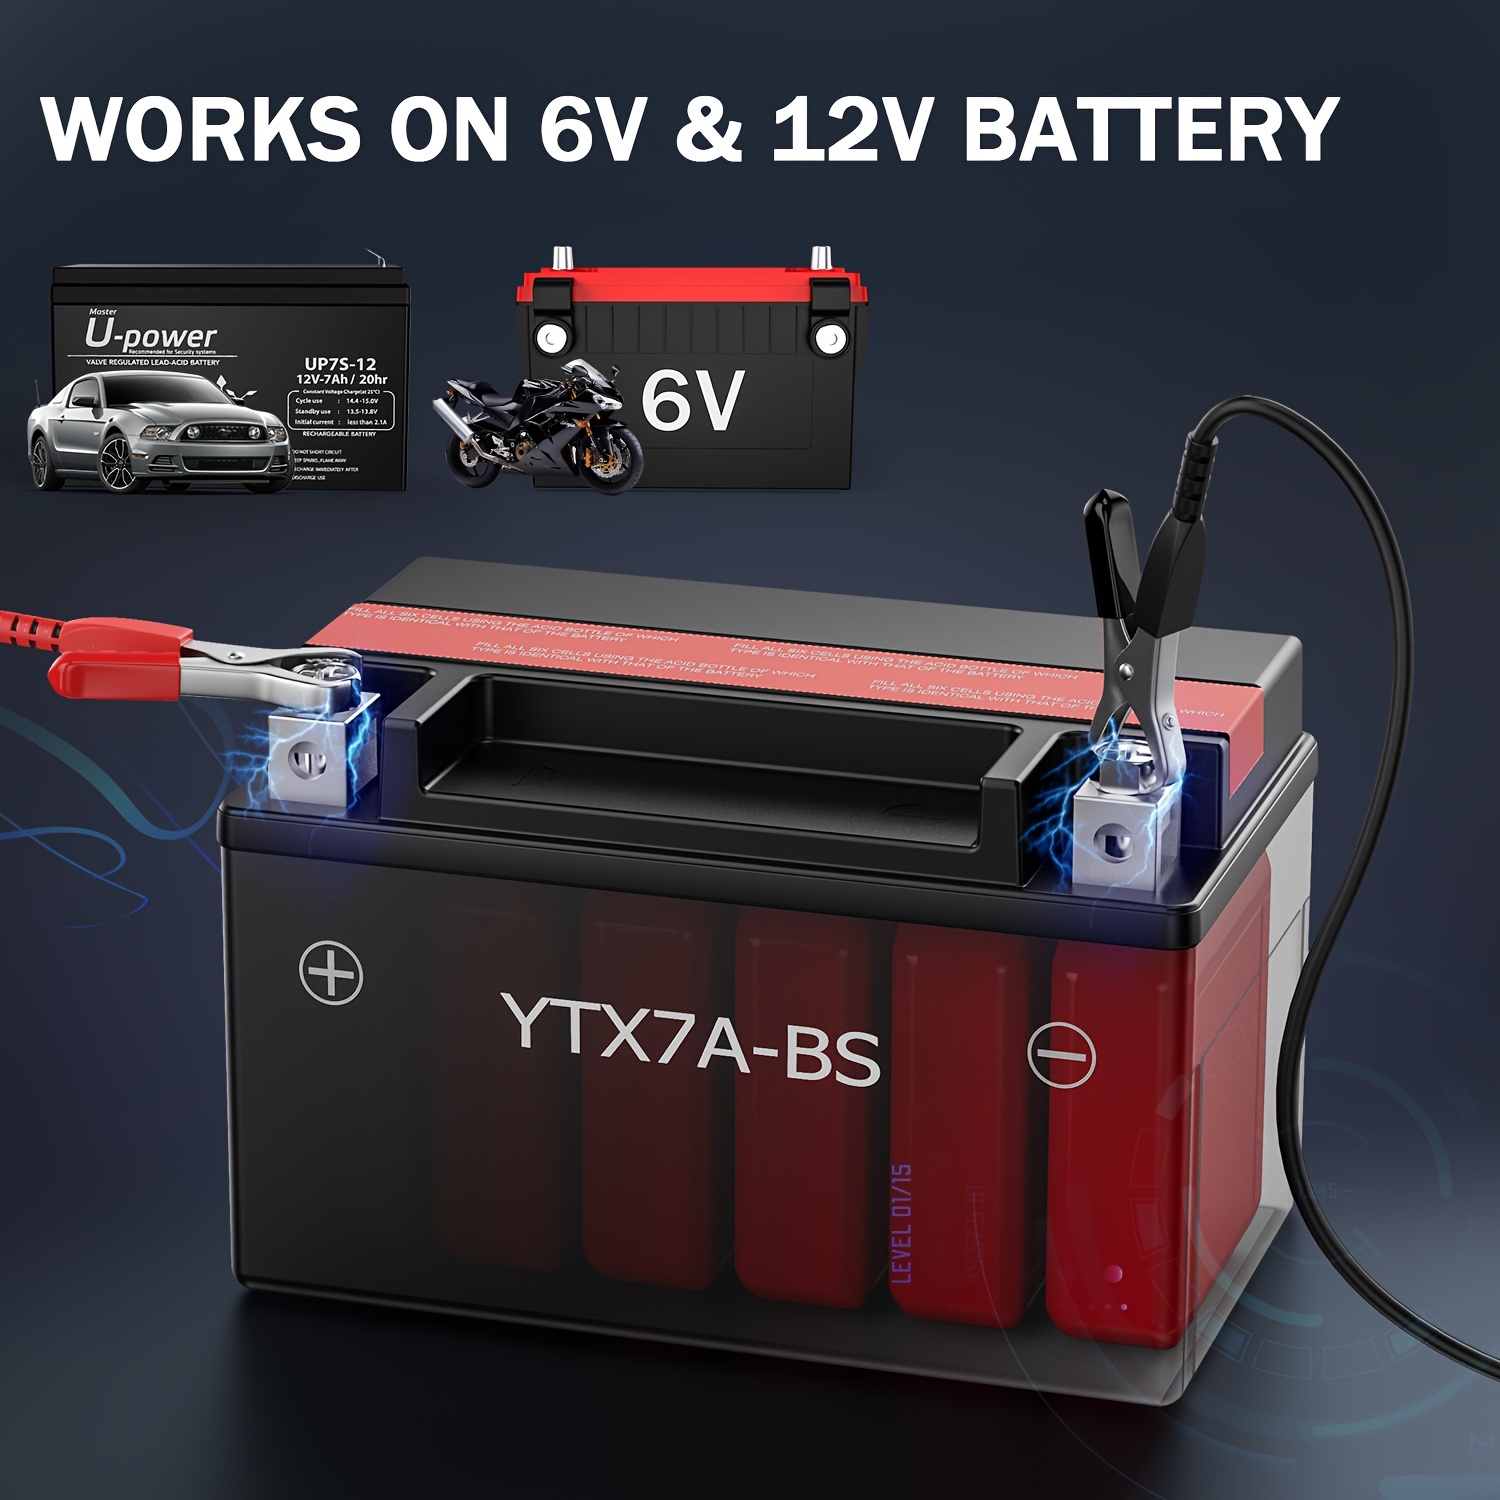 Redresseur pour batteries de voiture 6V / 12V